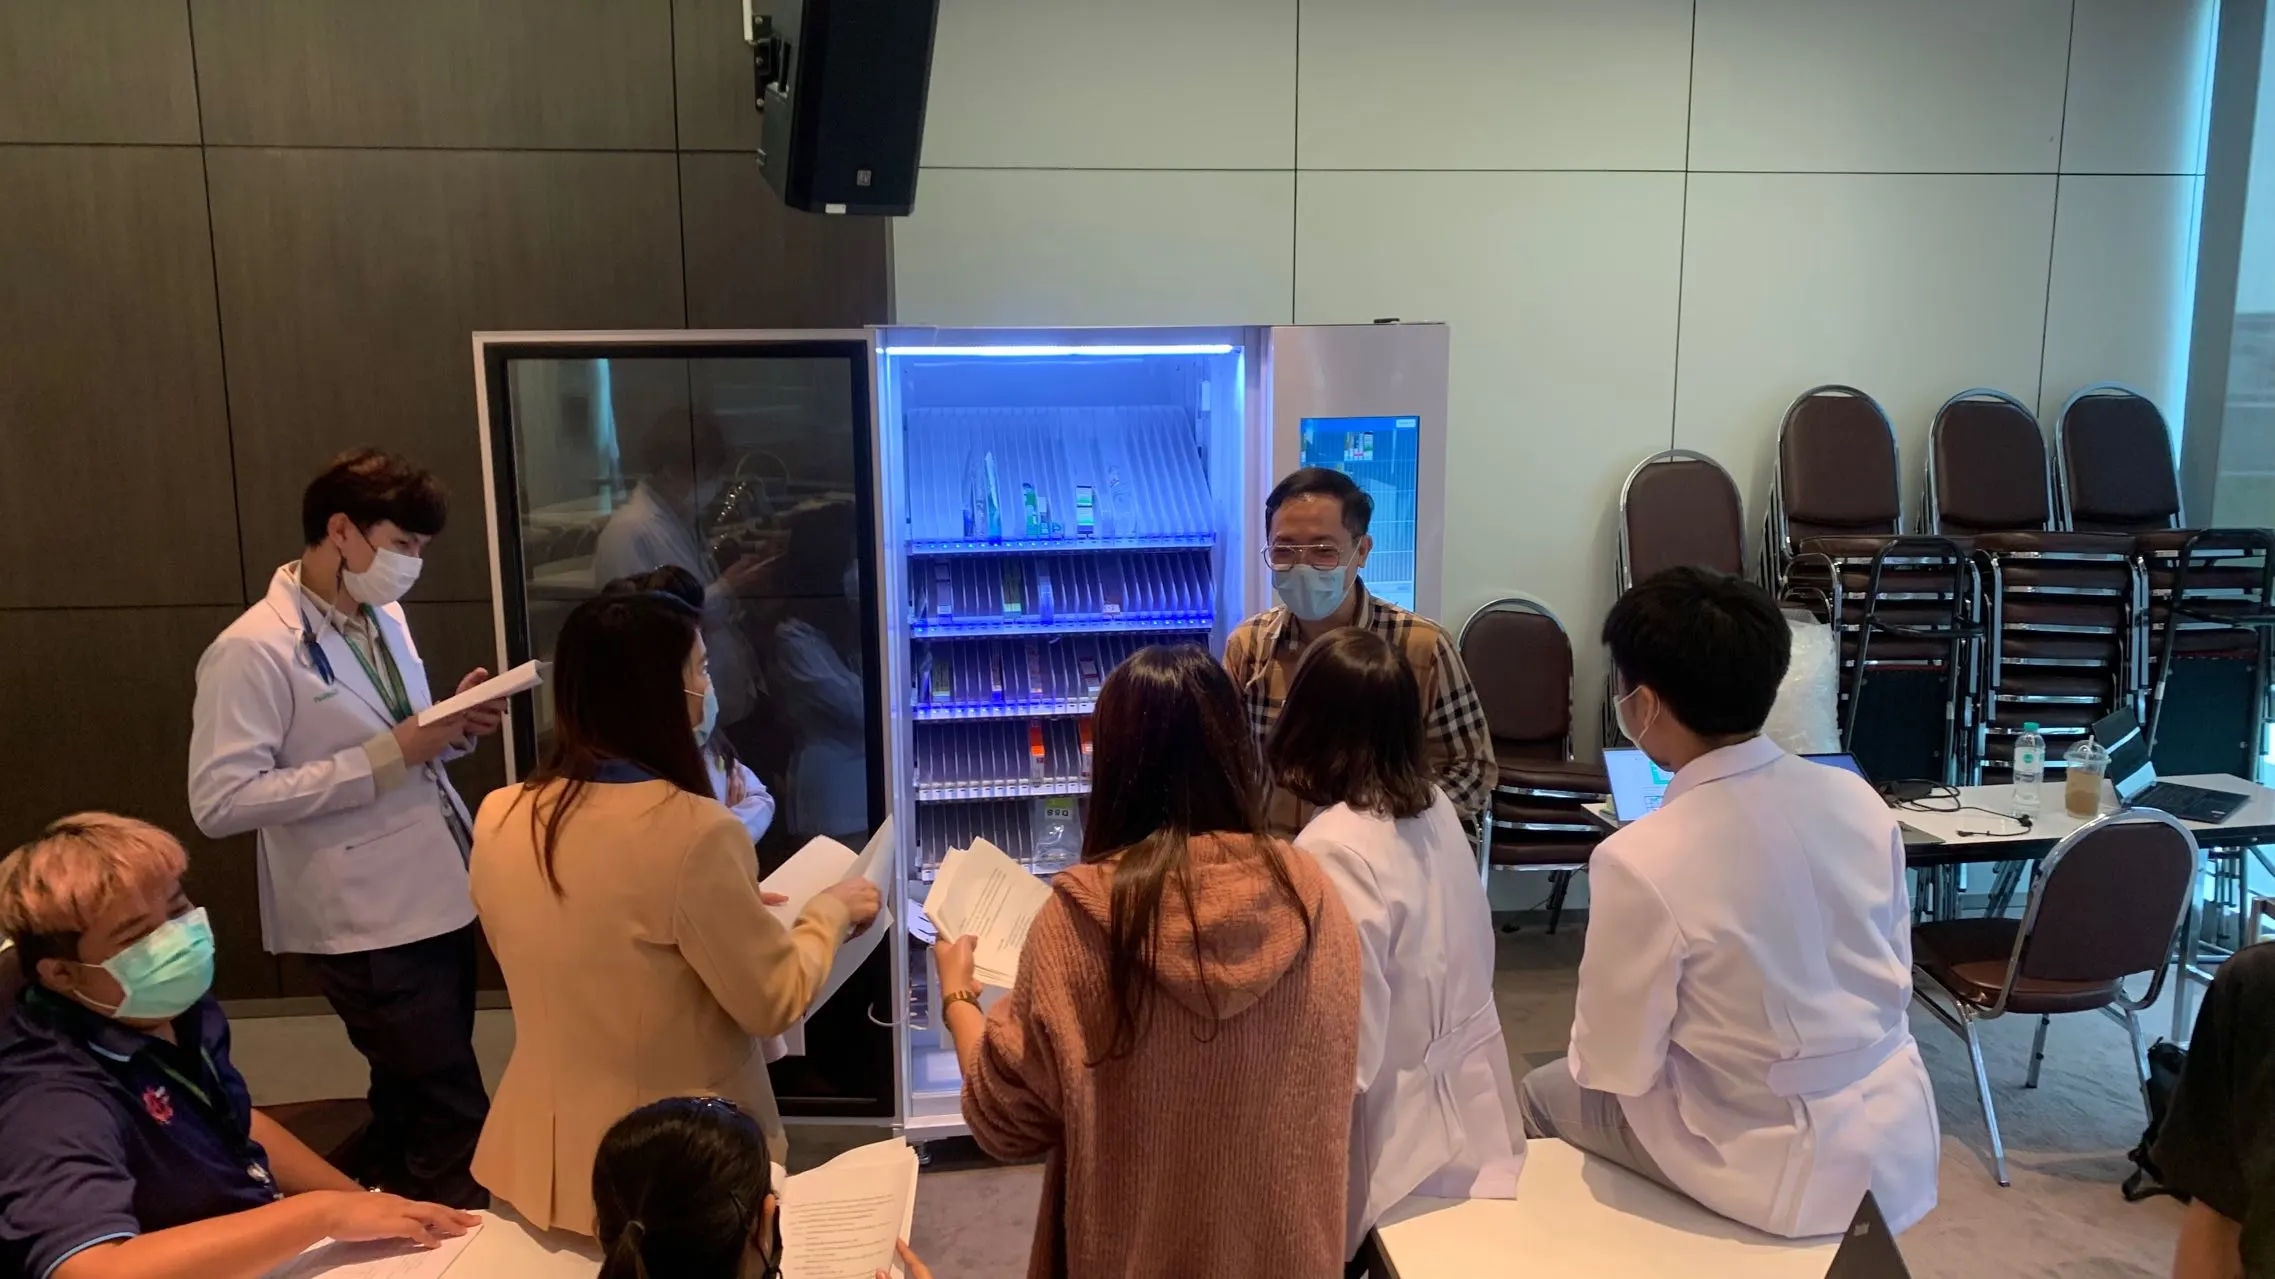 medicine vending machine in South Korea